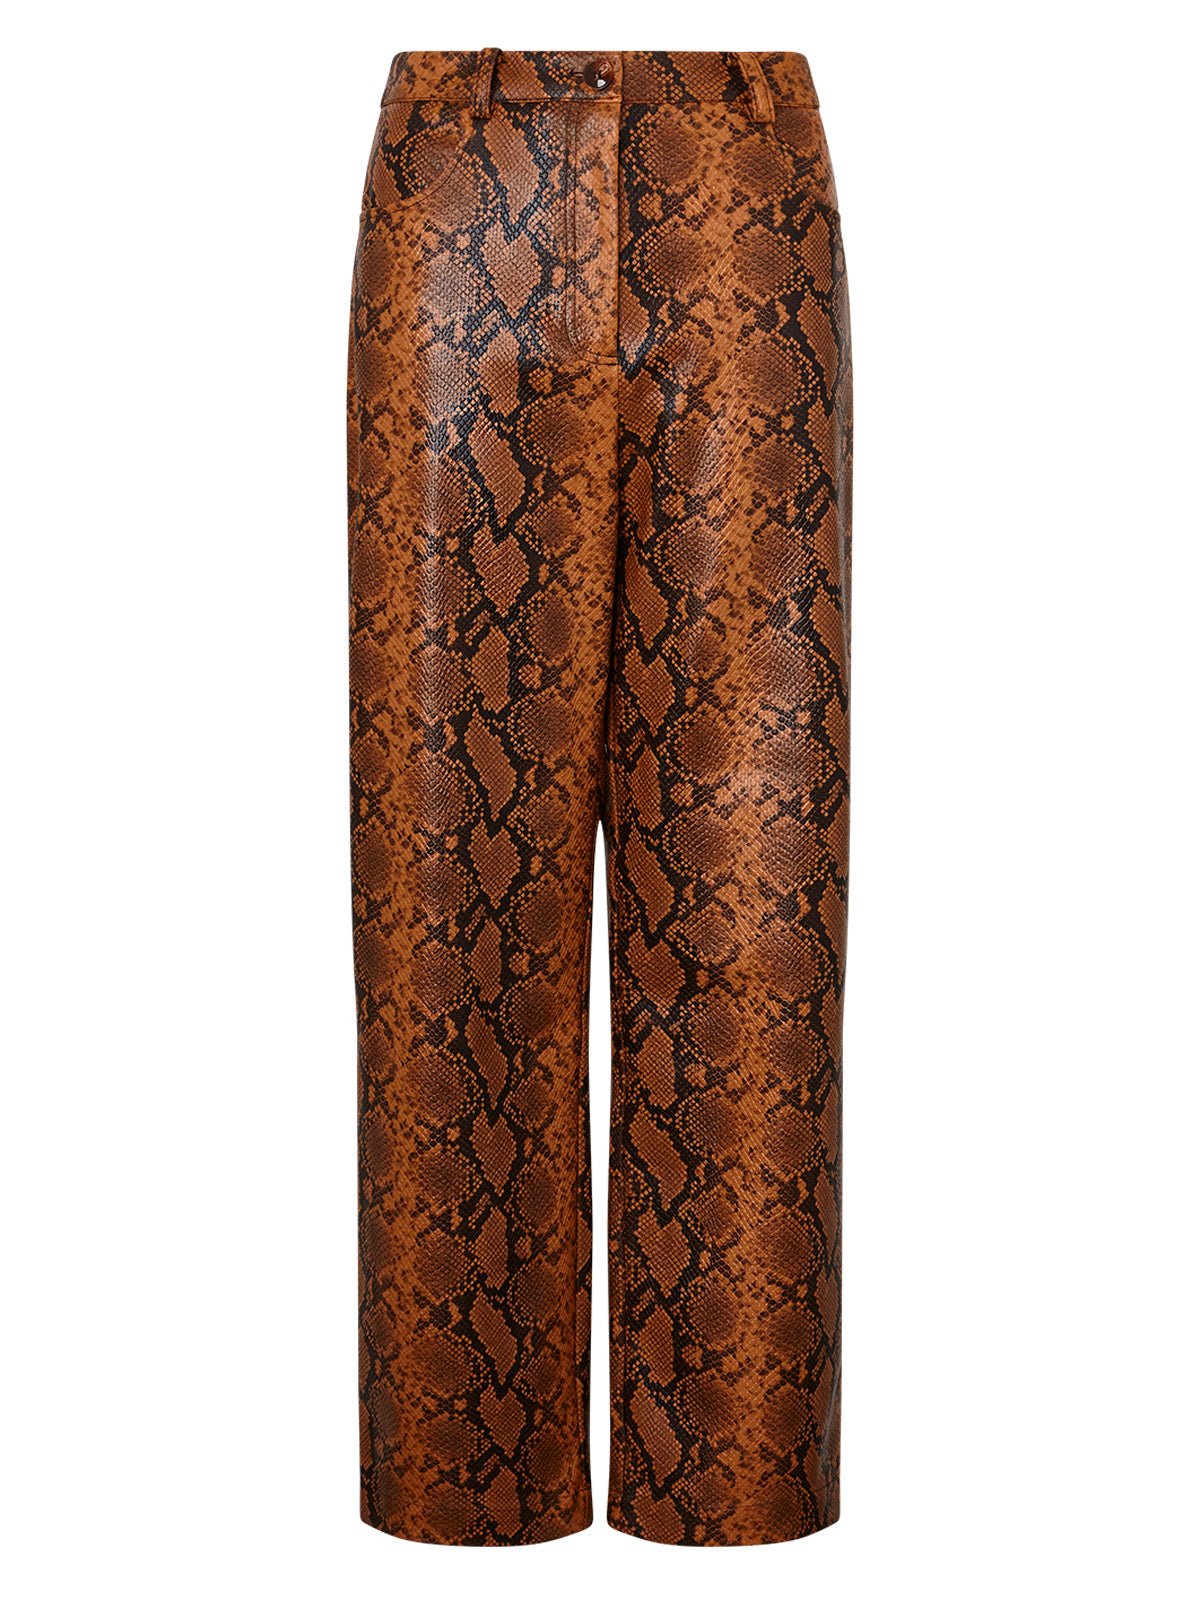 Women's Snake print flared trousers available in online. Price : 1380tk  **SERPENTINE SNAKESKIN ANIMAL PRINT FLARED BELL BOTTOM PANTS Join… |  Instagram